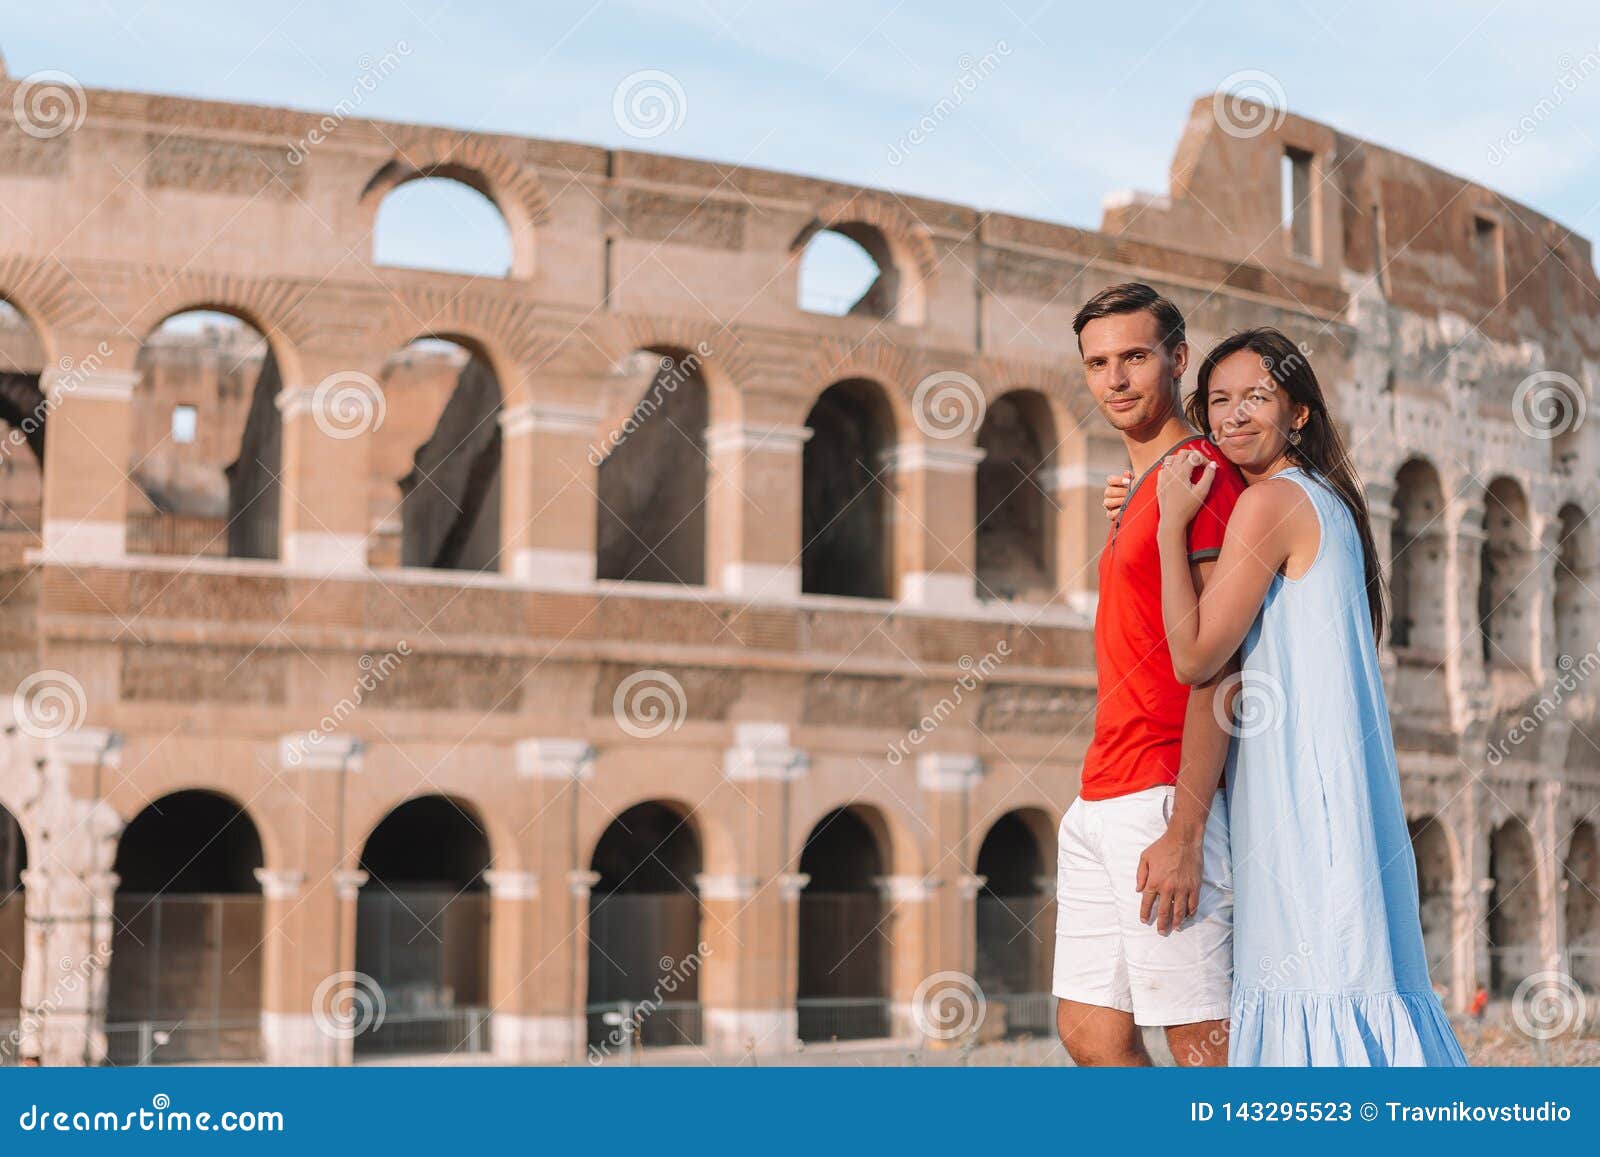 3,752 Man kiss woman foot Images, Stock Photos & Vectors | Shutterstock